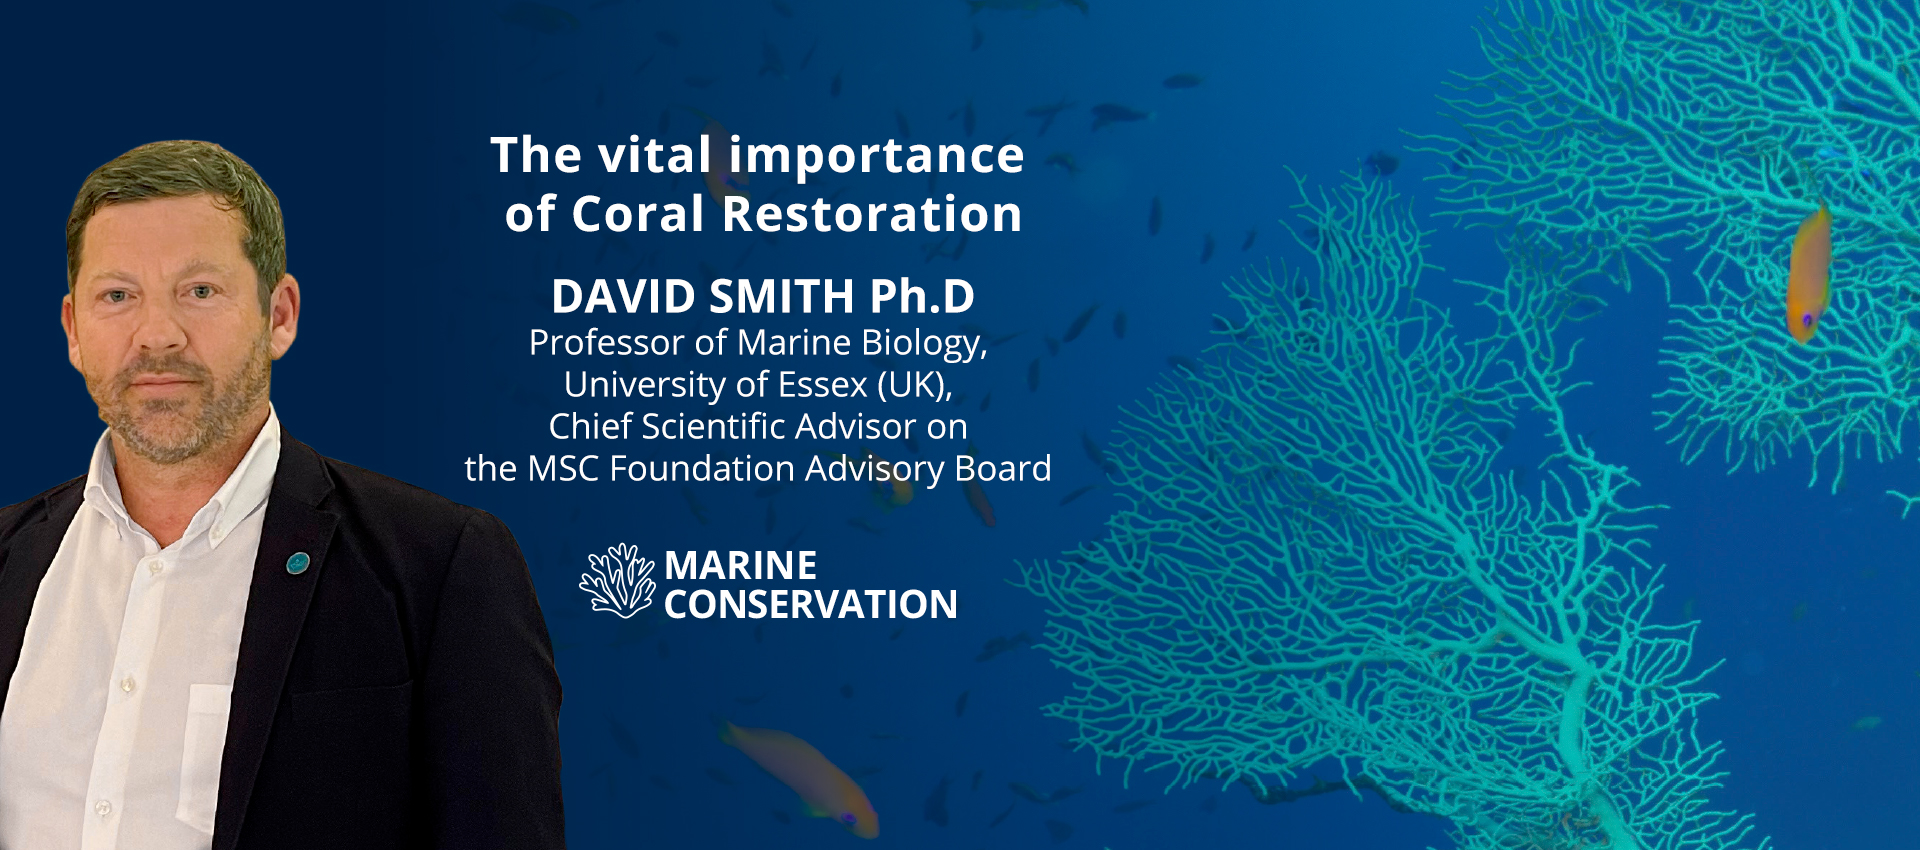 The vital importance of Coral Restoration | MSC Foundation